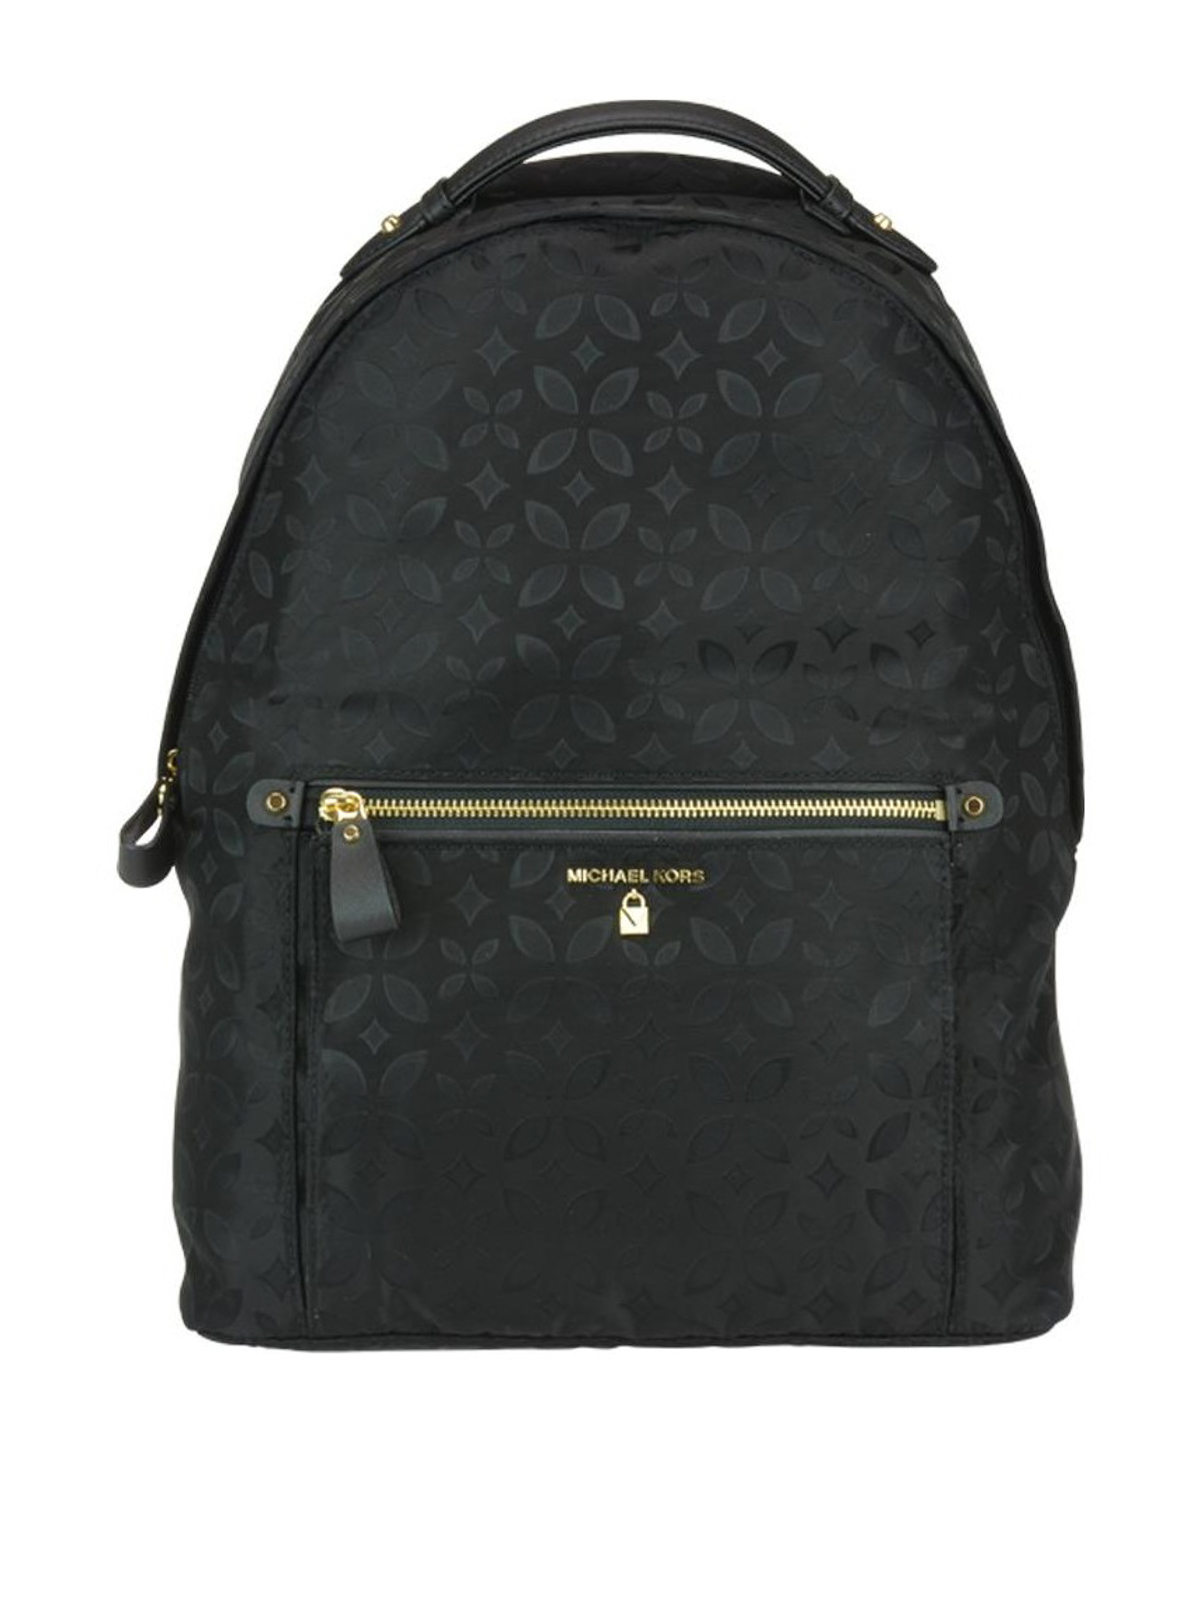 Backpacks Michael Kors - Kelsey black floral nylon large backpack -  30F8GO2B4J001